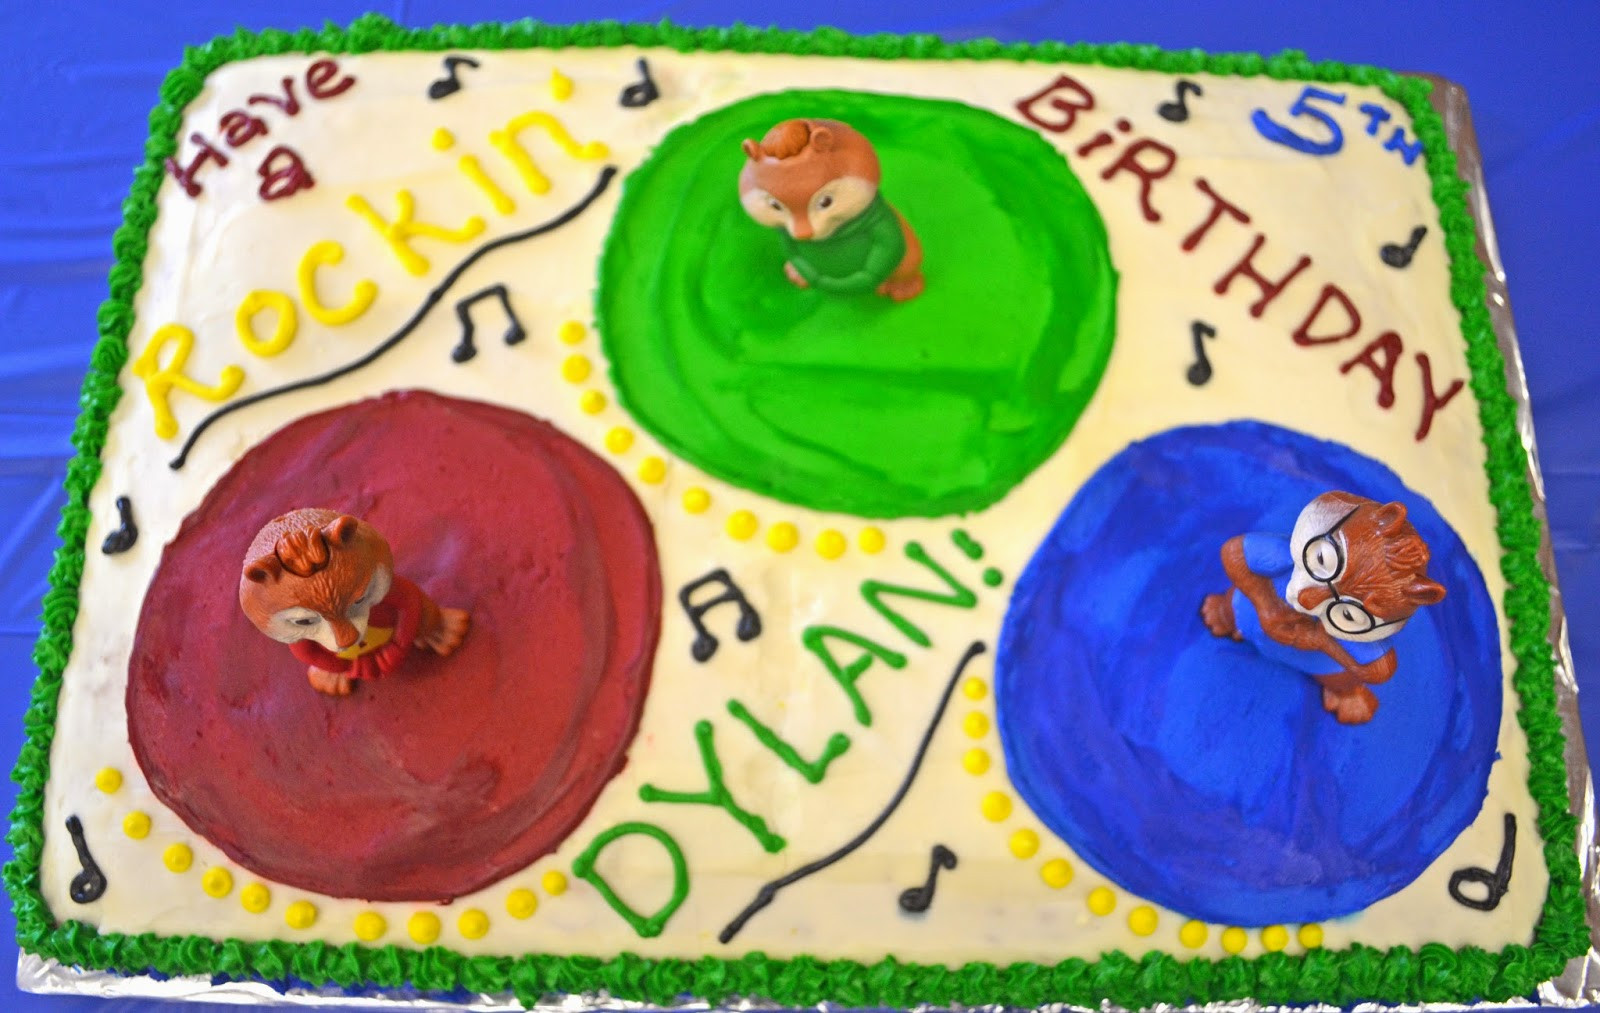 Alvin And The Chipmunks Birthday Cake
 Affordable Cakes by Tiffany Alvin and the Chipmunks Cake